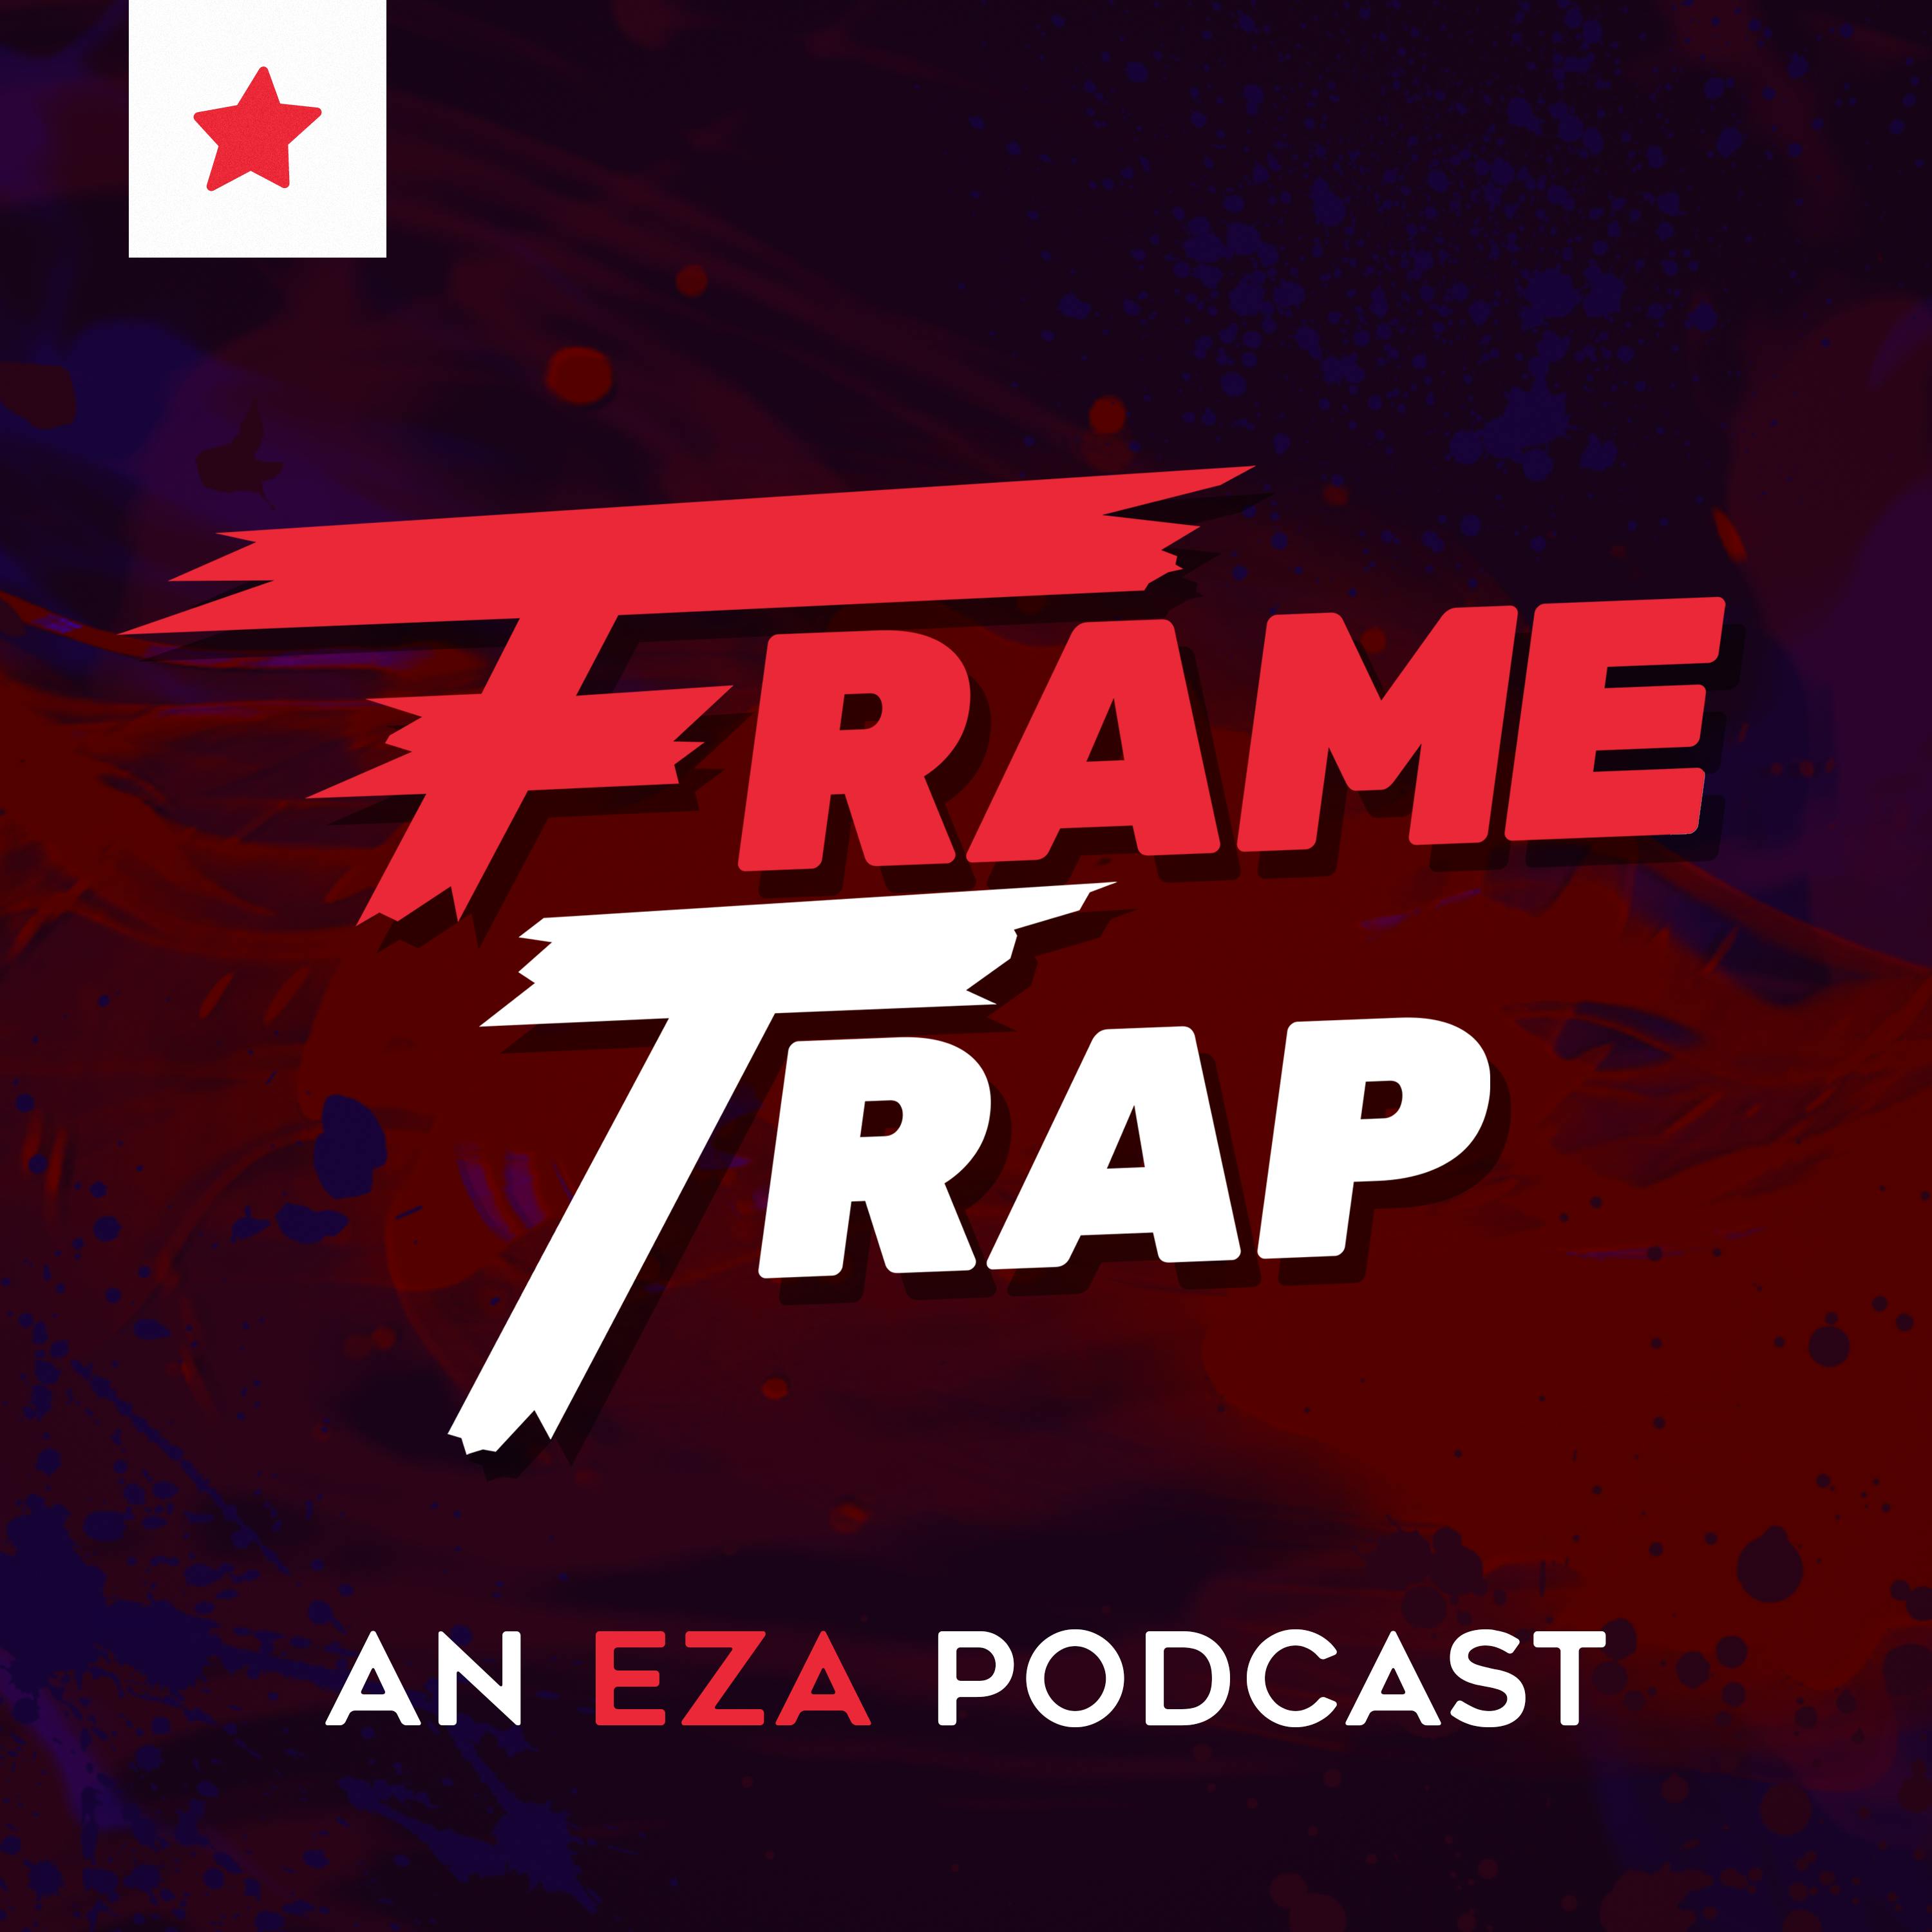 Frame Trap - Episode 166 